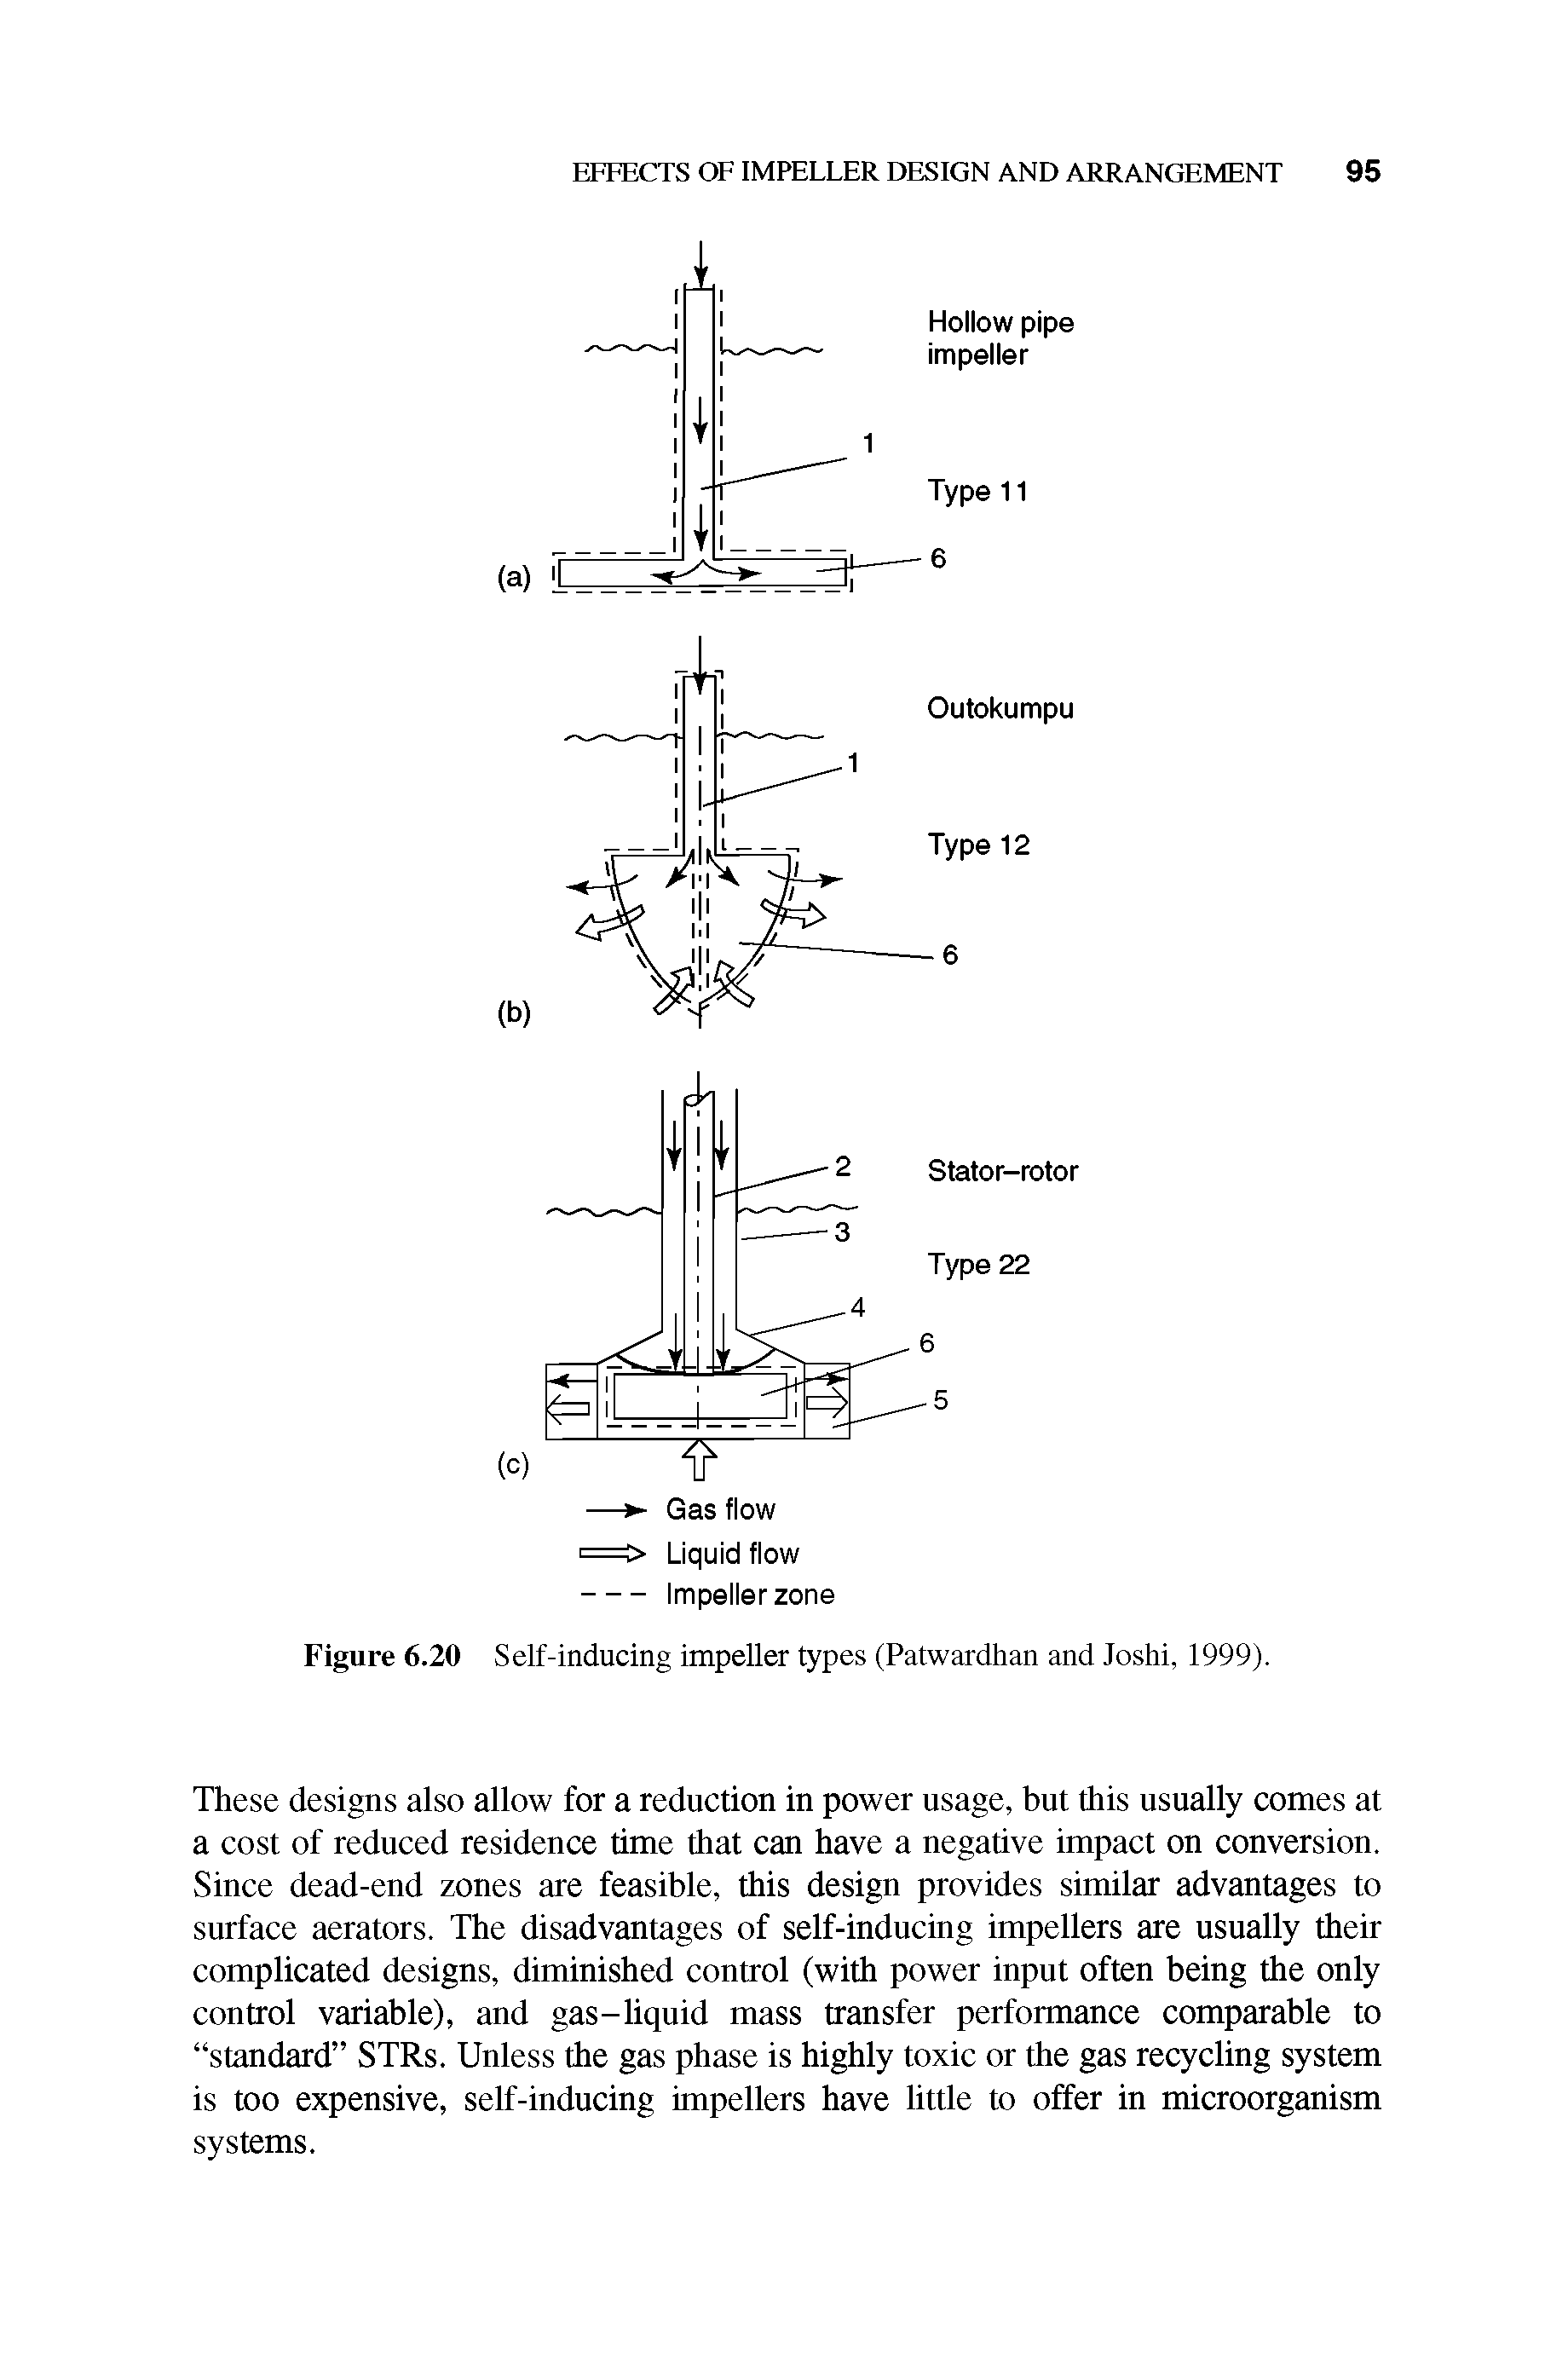 Figure 6.20 Self-inducing impeller types (Patwardhan and Joshi, 1999).